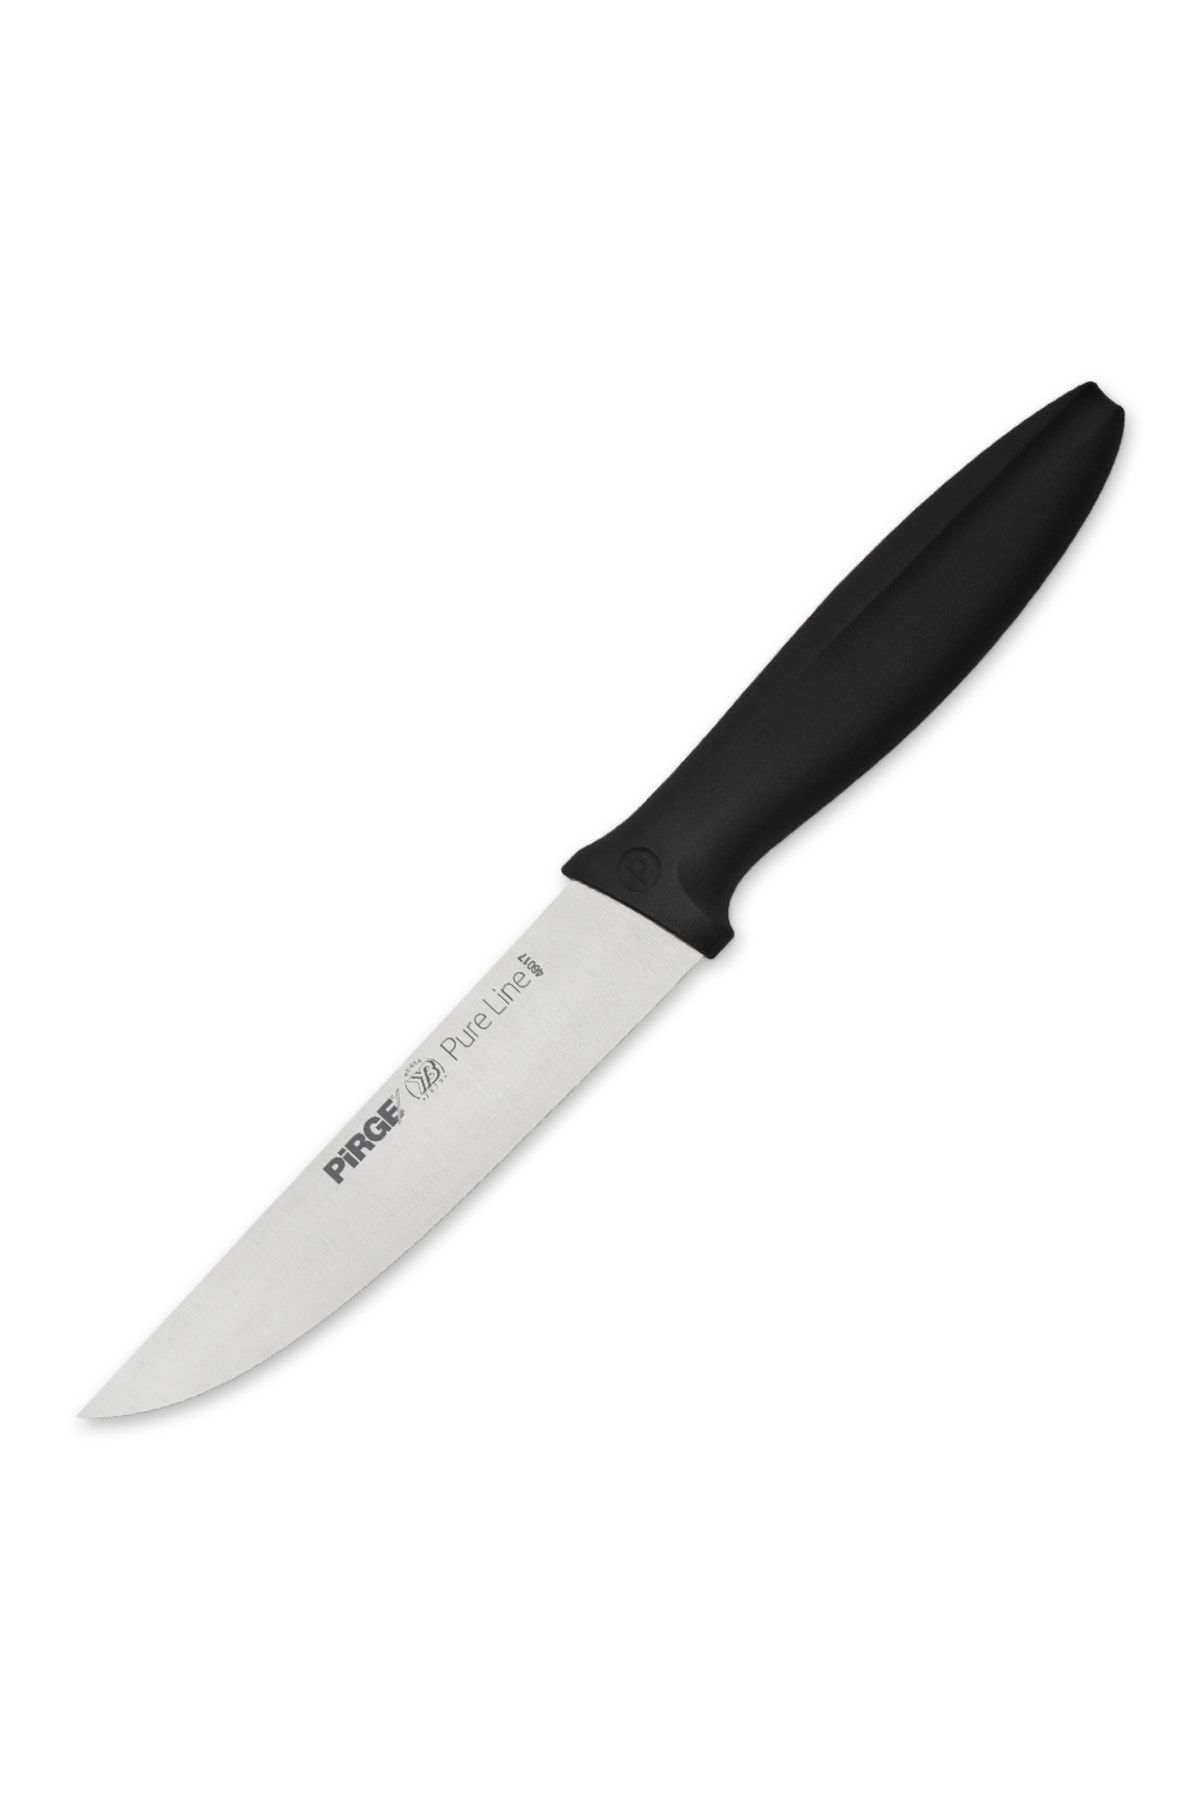 Pirge Pure Line Et Bıçağı 16 cm - 46017